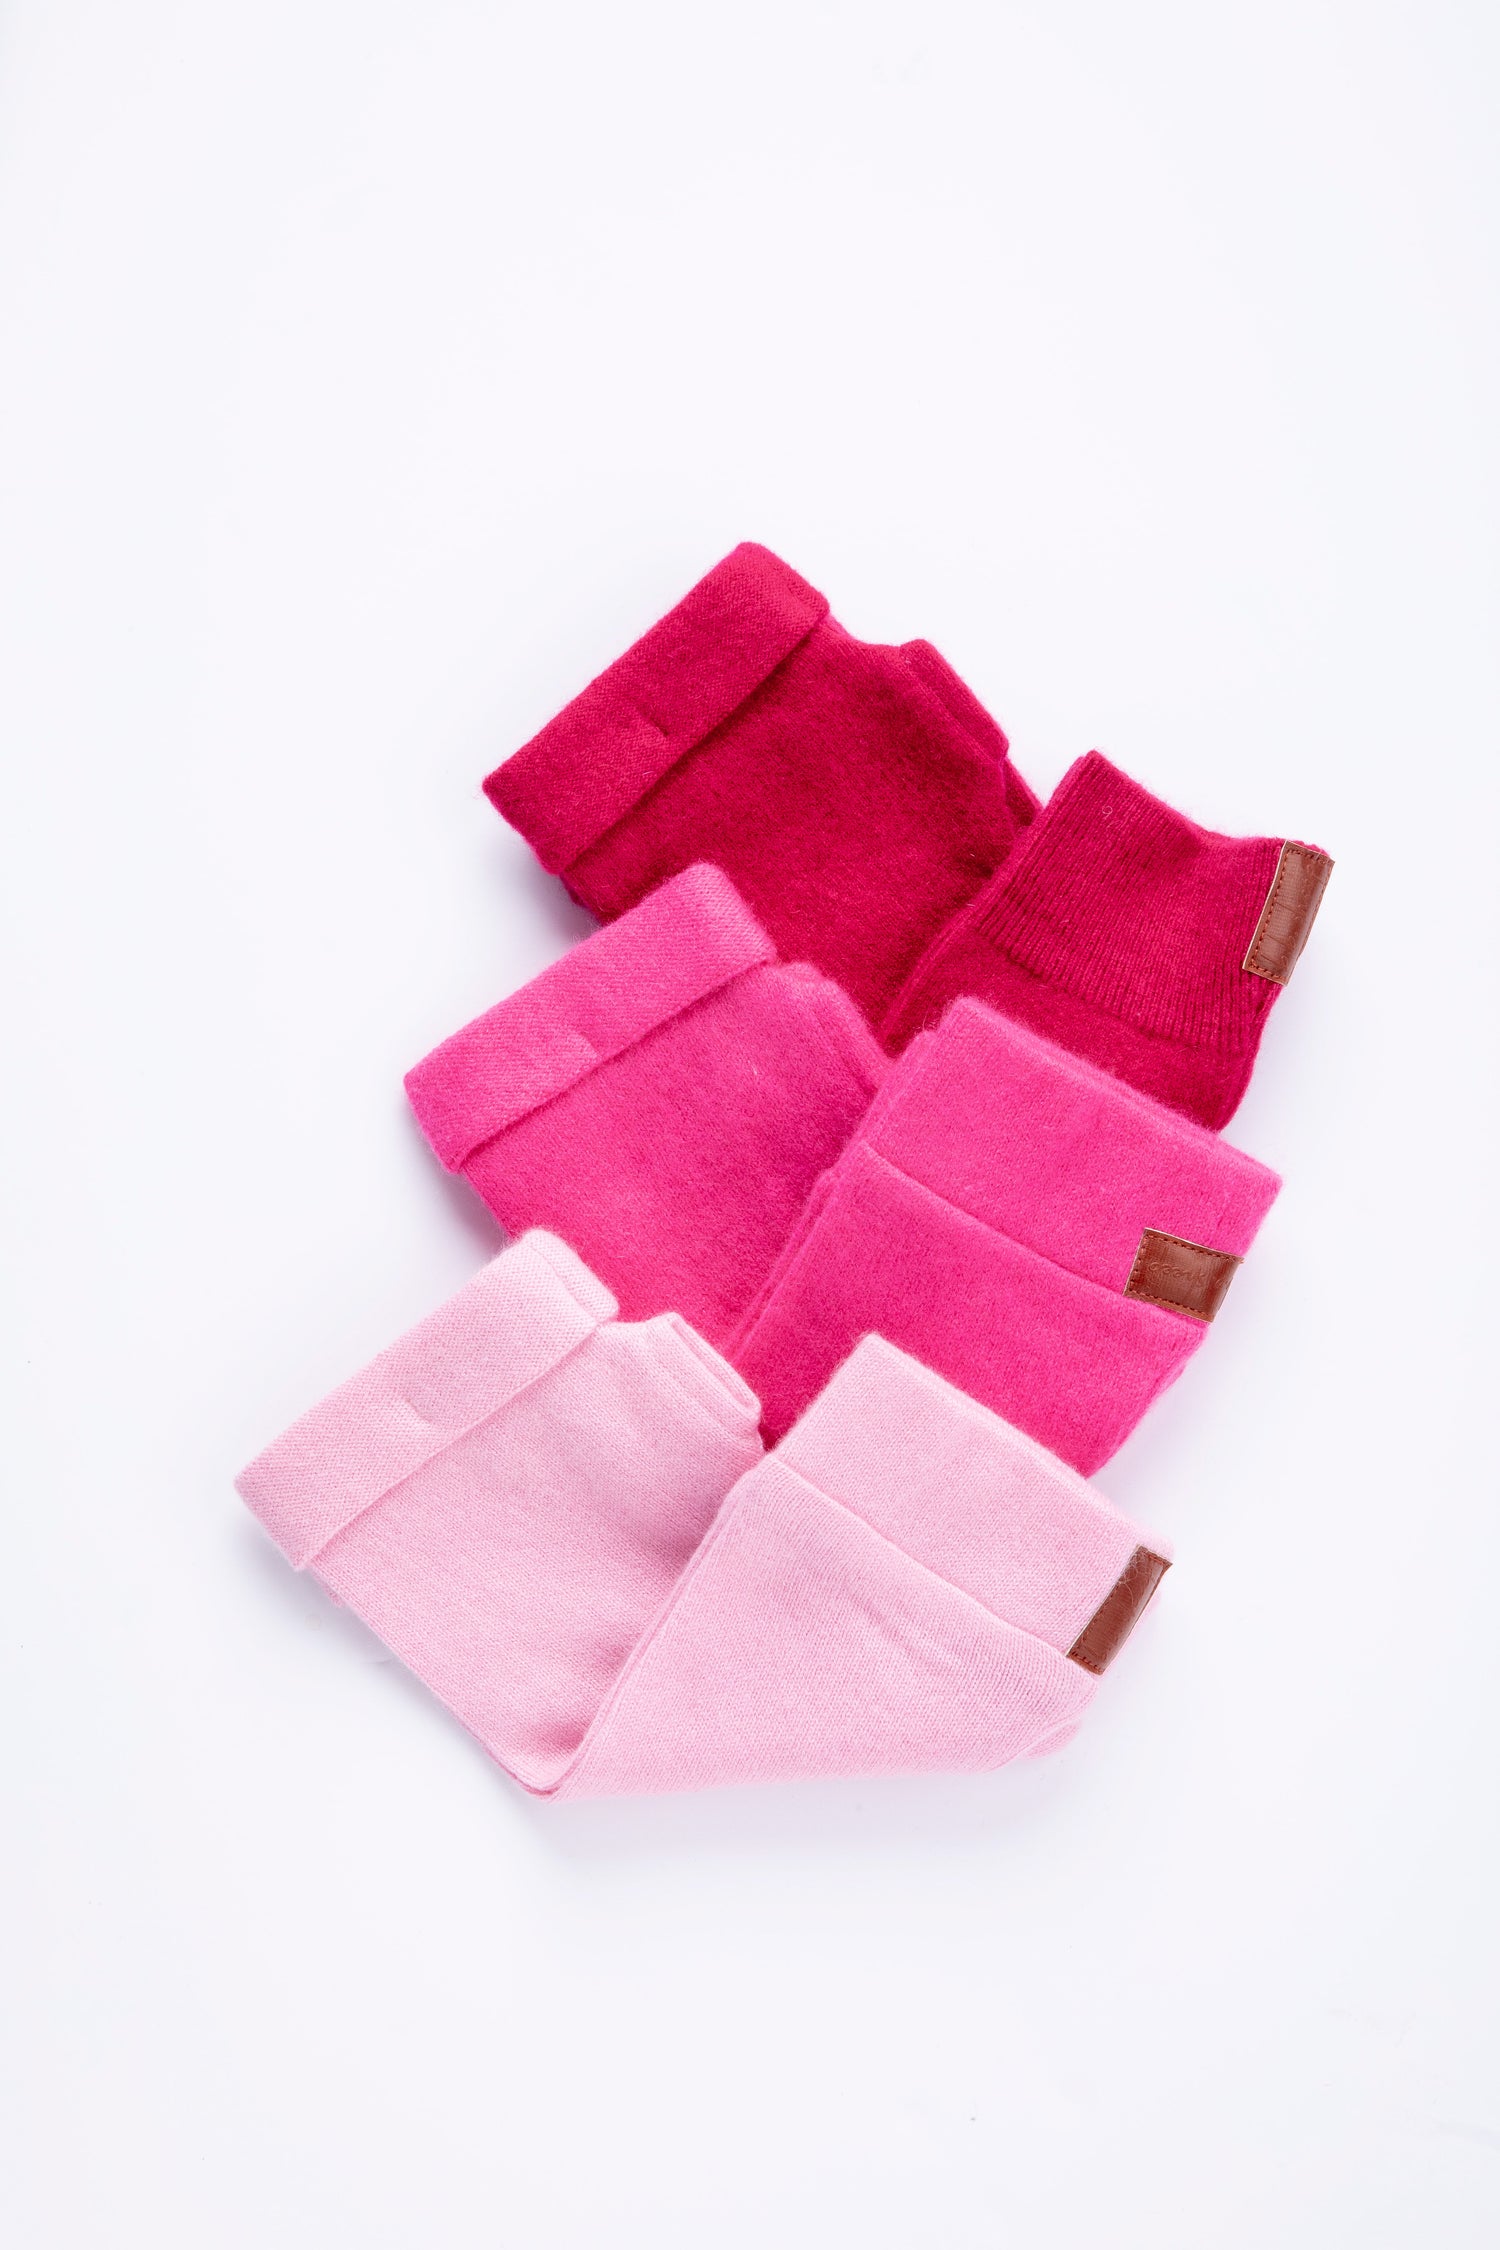 Barbie Fingerless Gloves Set - Dark Pink, Hot Pink and Baby Pink Box of 3